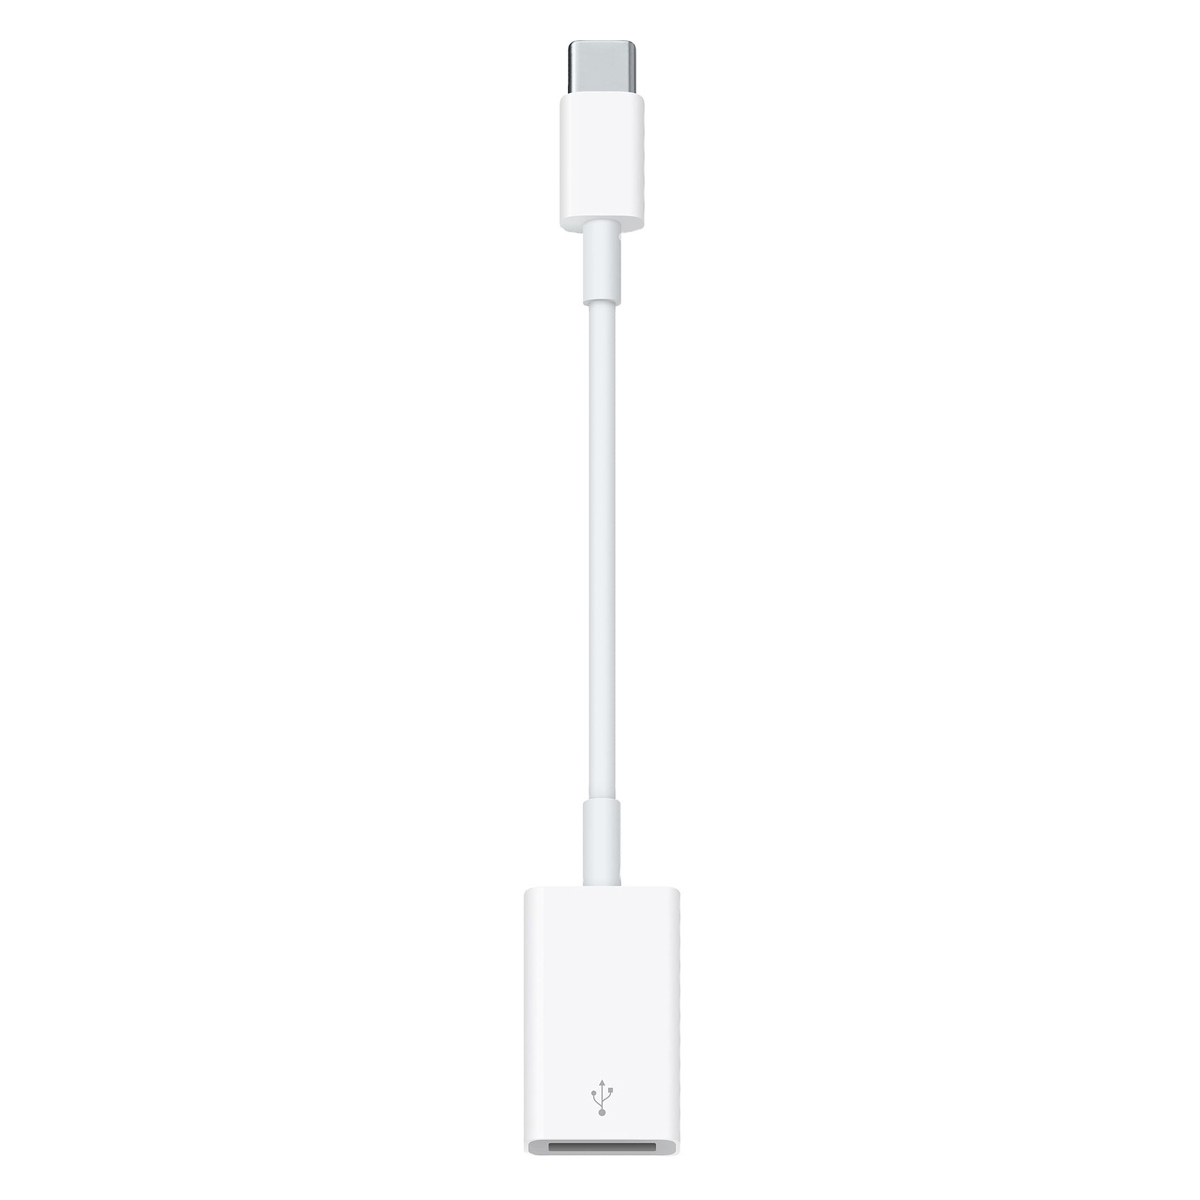 Adaptador USB Tipo C a USB Apple MJ1M2AM/A / Blanco